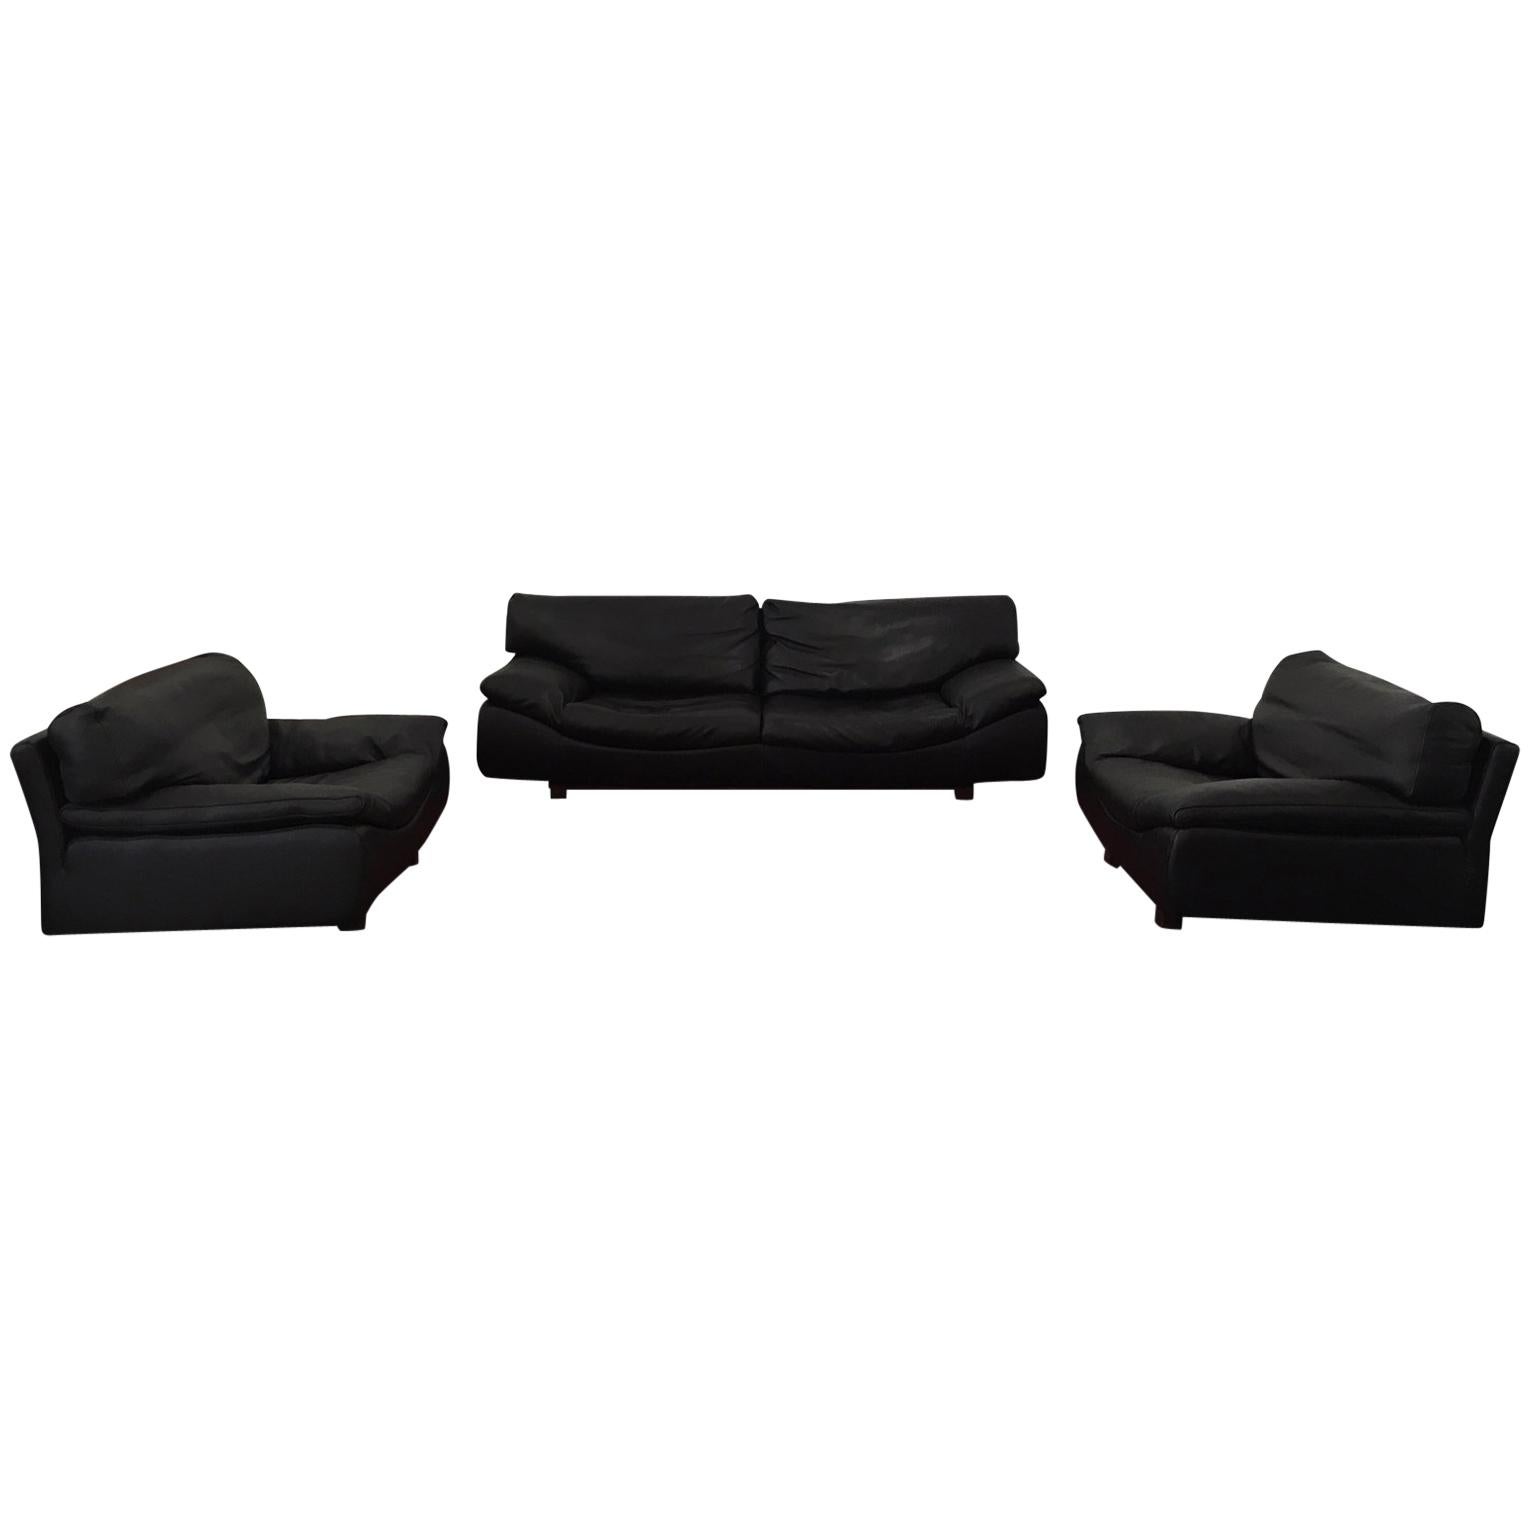 Black Leather Postmodern, Roche Bobois Sofa Set, Living Room Set FINAL SALE!